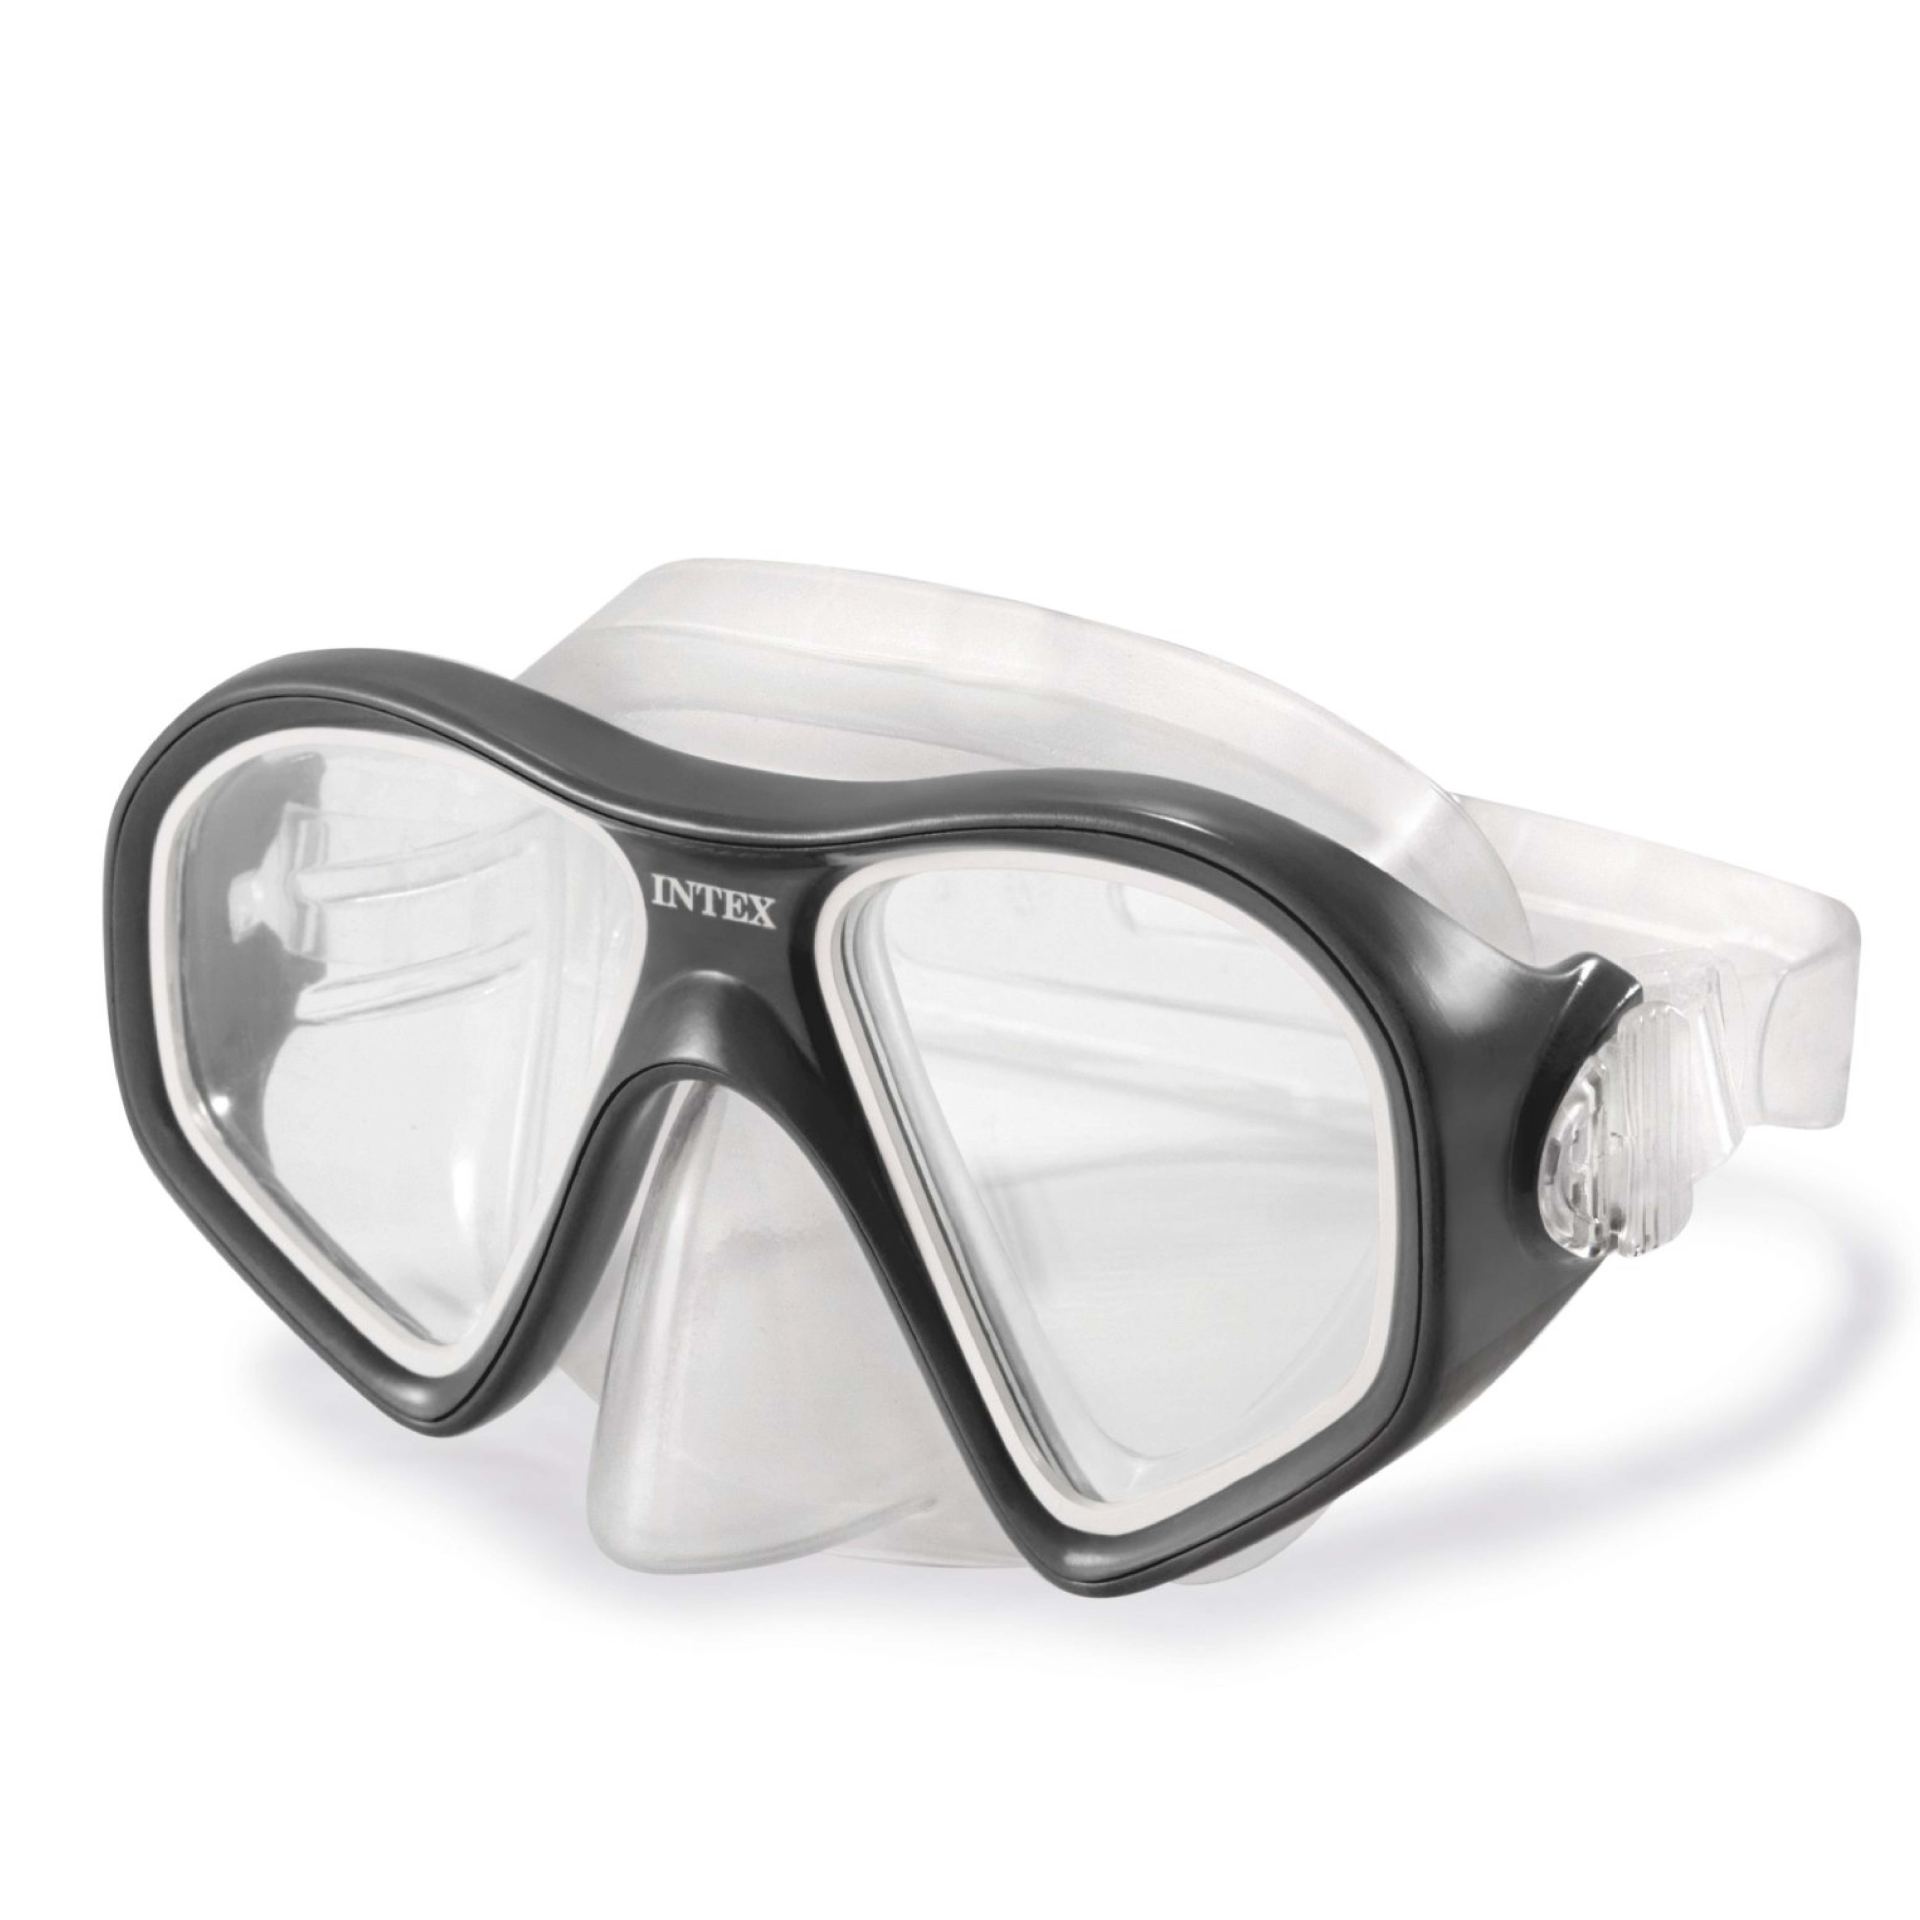 Intex reef rider masks - Zwart